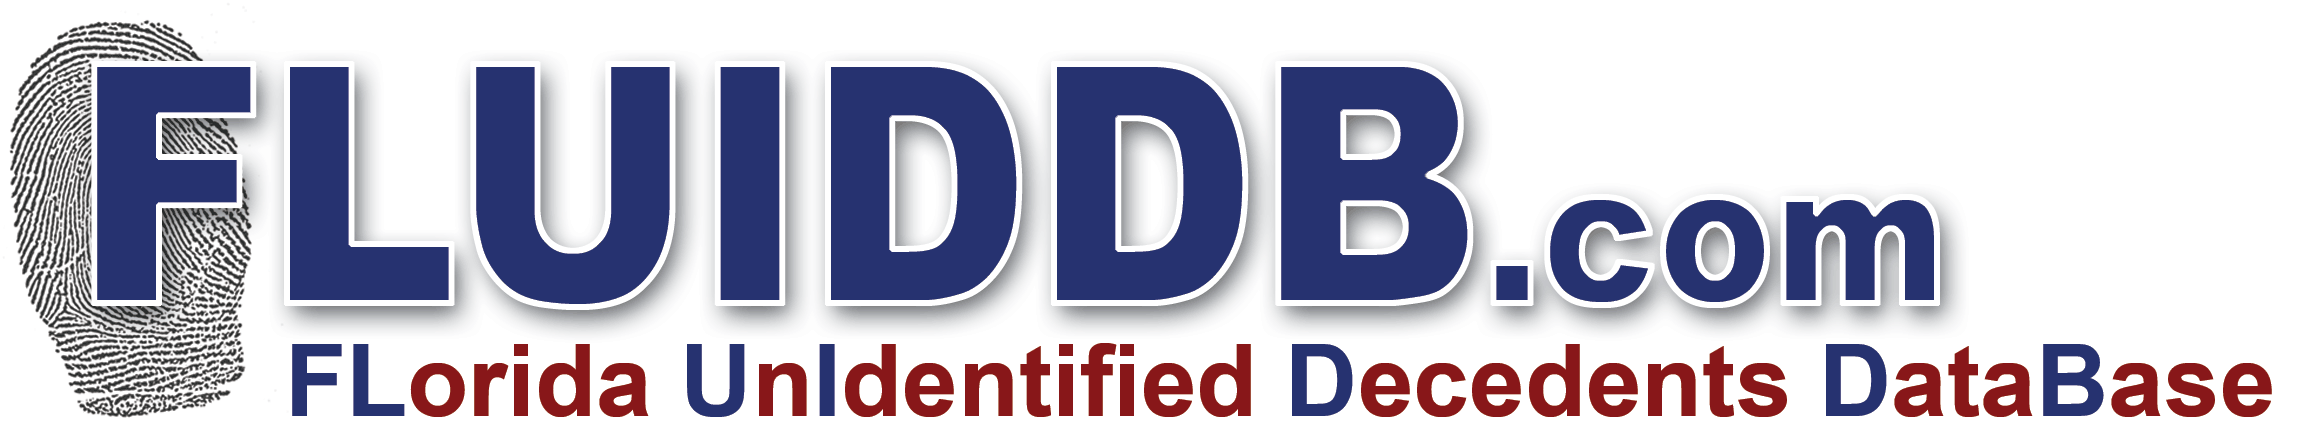 Florida Unidentified Decedents DataBase